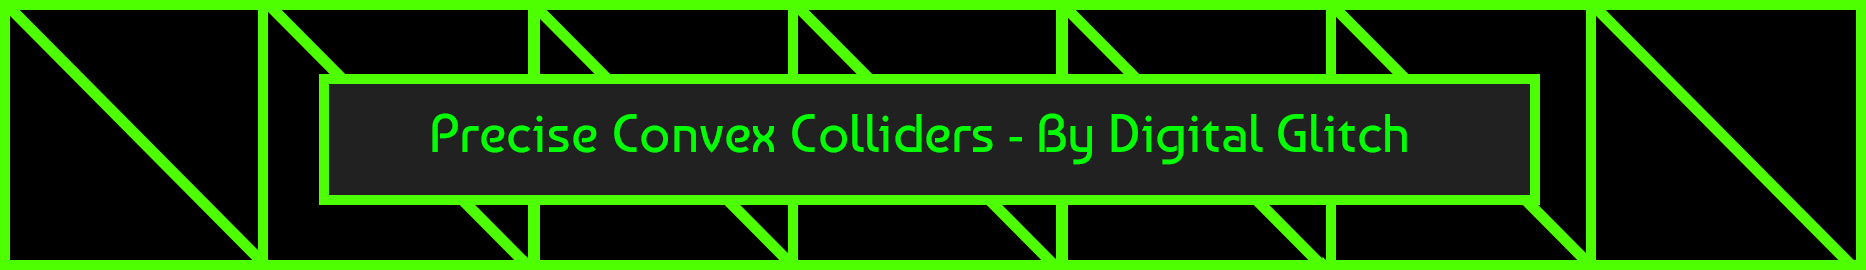 Precise Convex Colliders